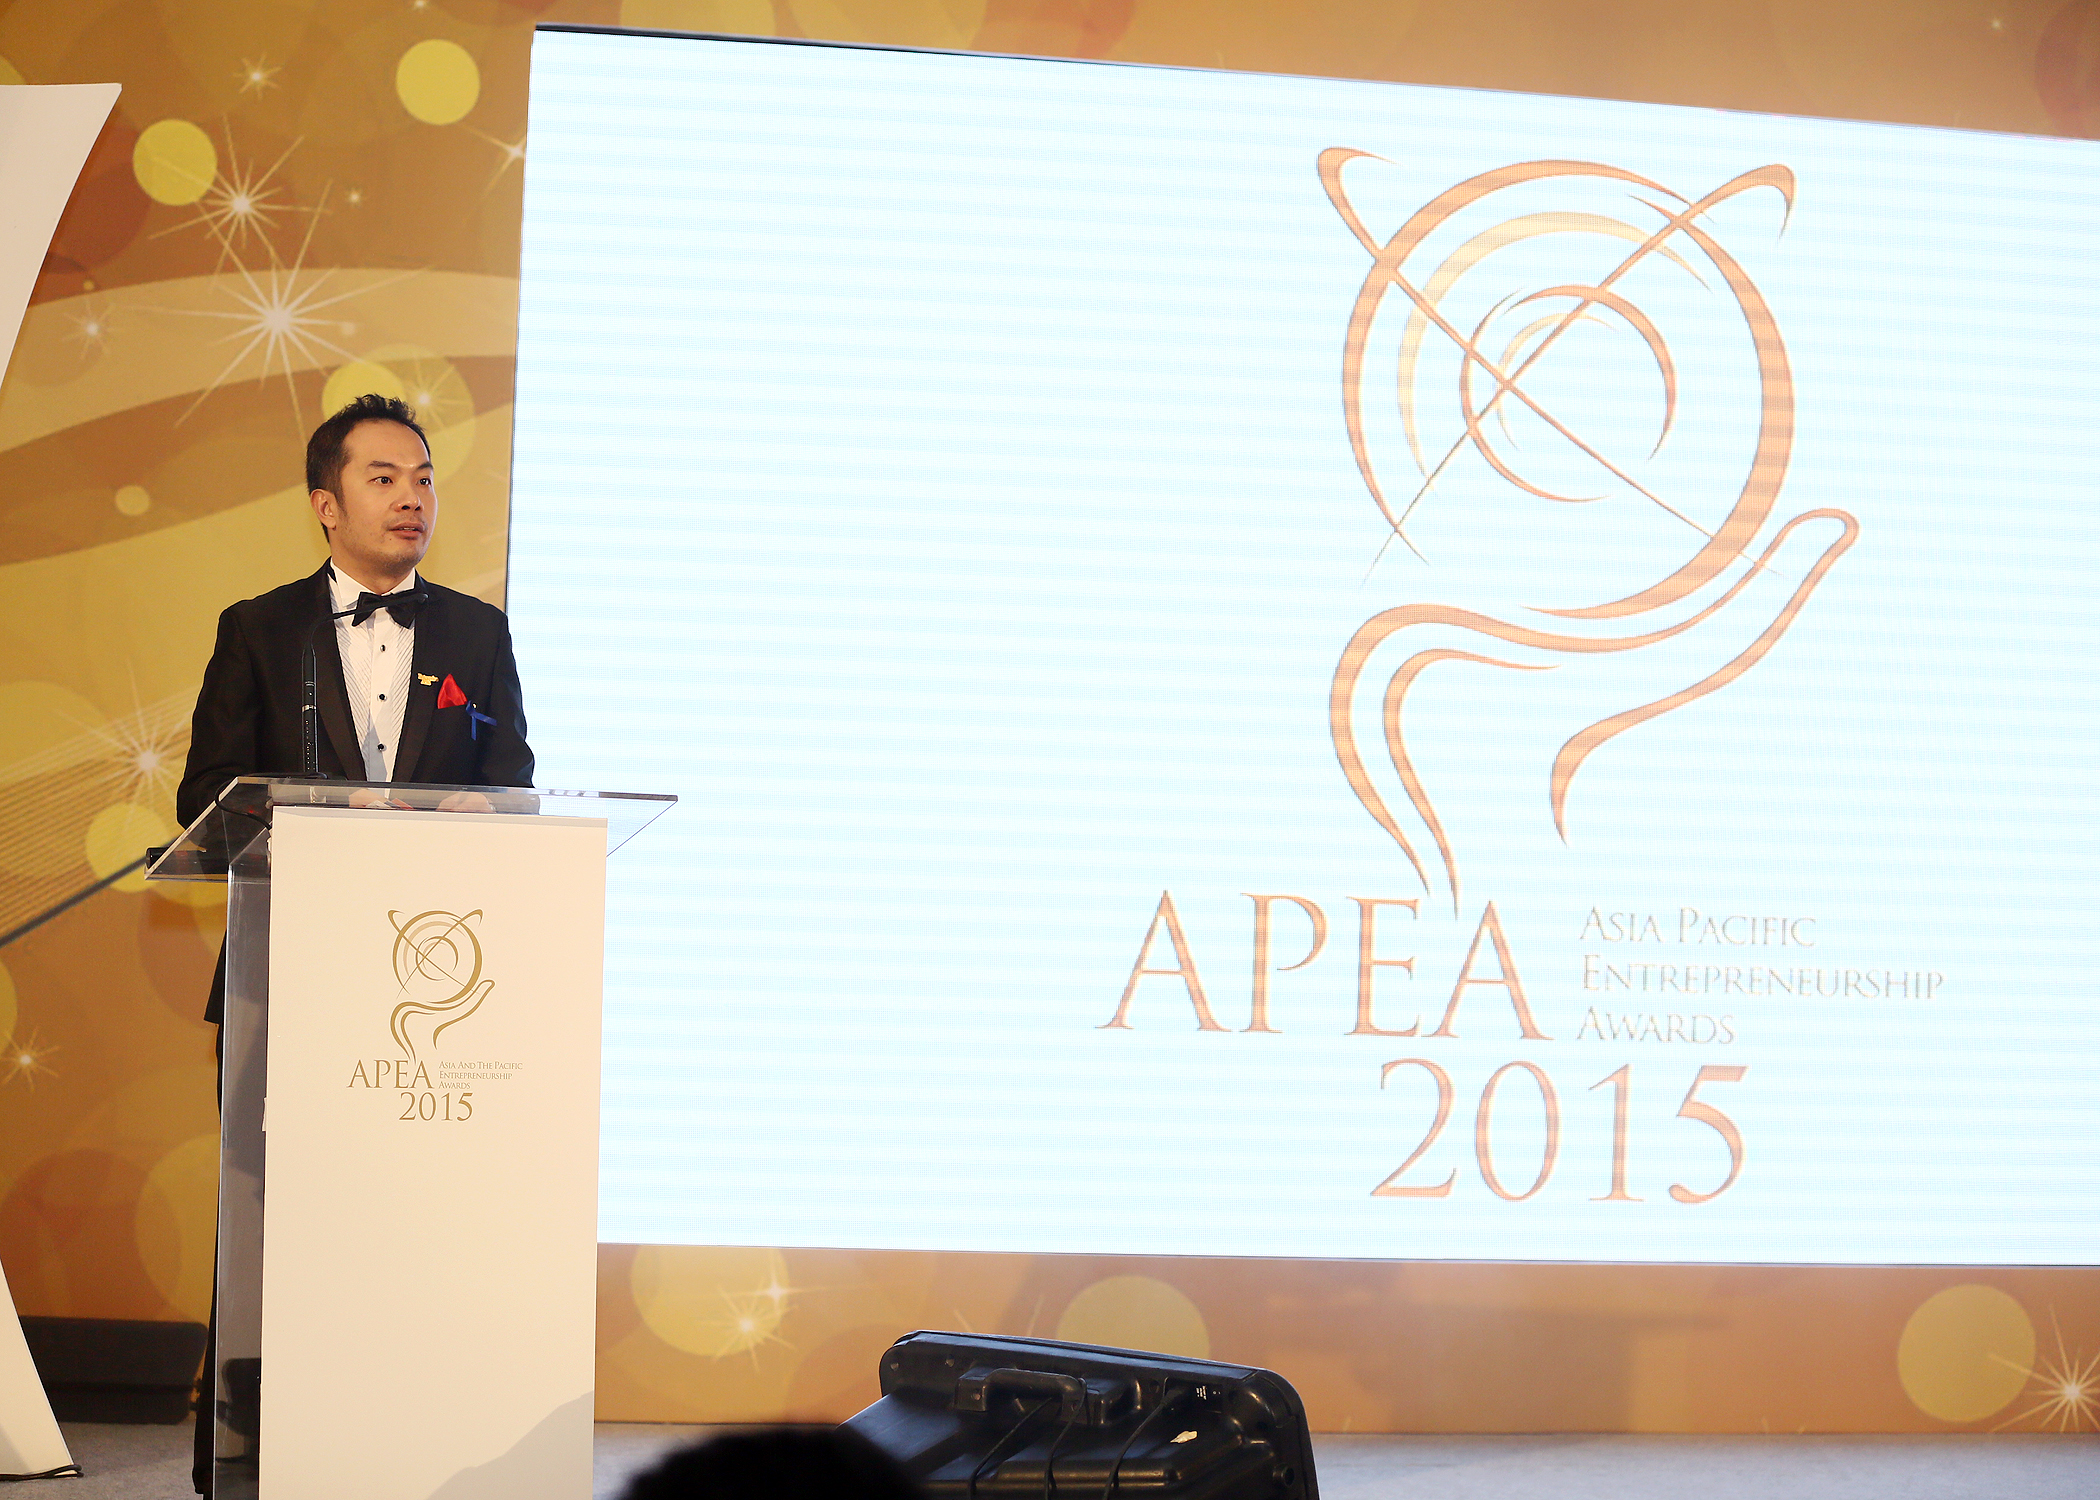 William Ng, president of Enterprise Asia, addressing the audience of 250 entrepreneurs in Dubai